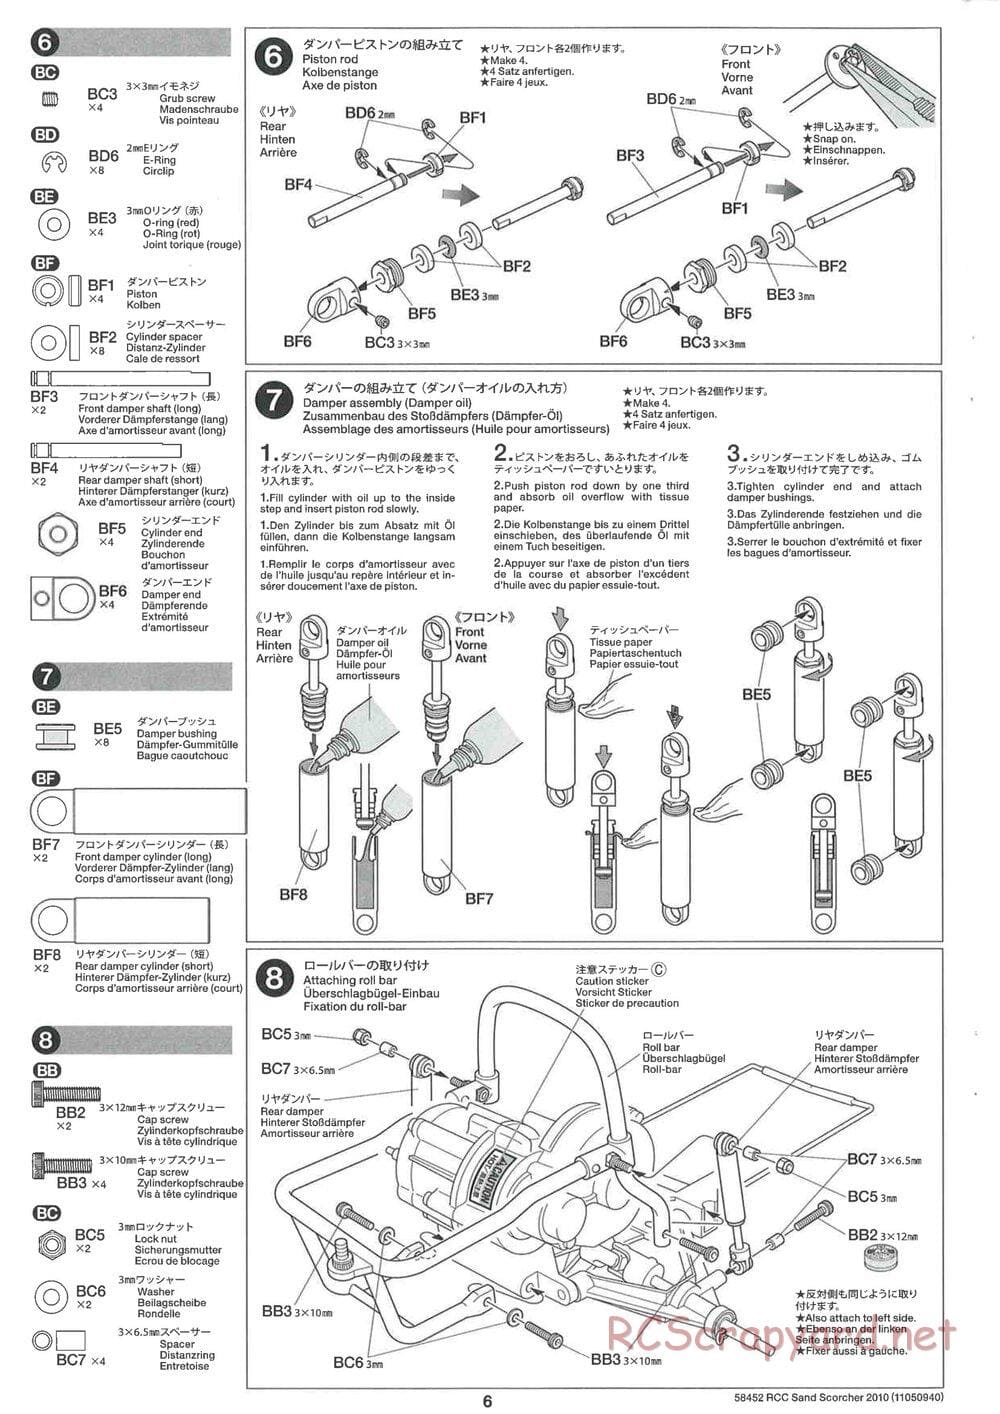 Tamiya - Sand Scorcher 2010 - SRB v1 Chassis - Manual - Page 6